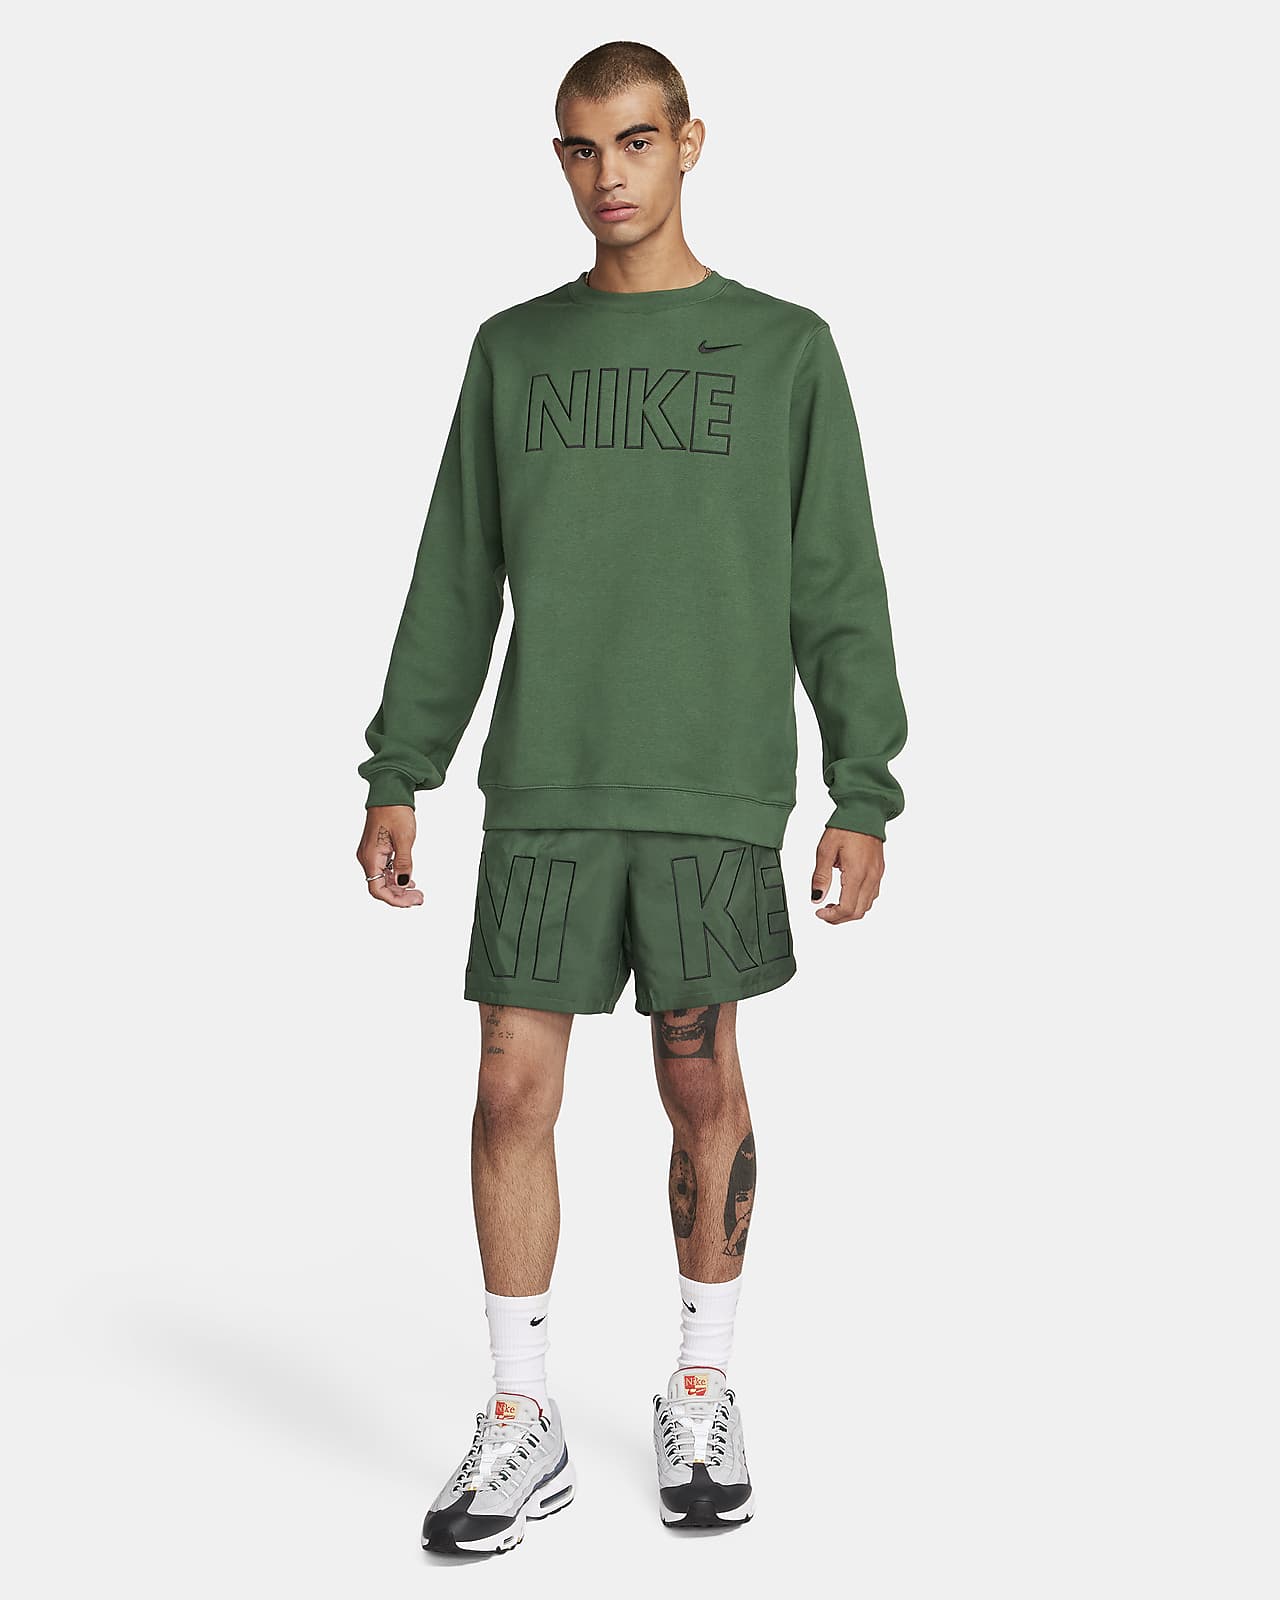 Nike Sportswear Club Fleece Crew